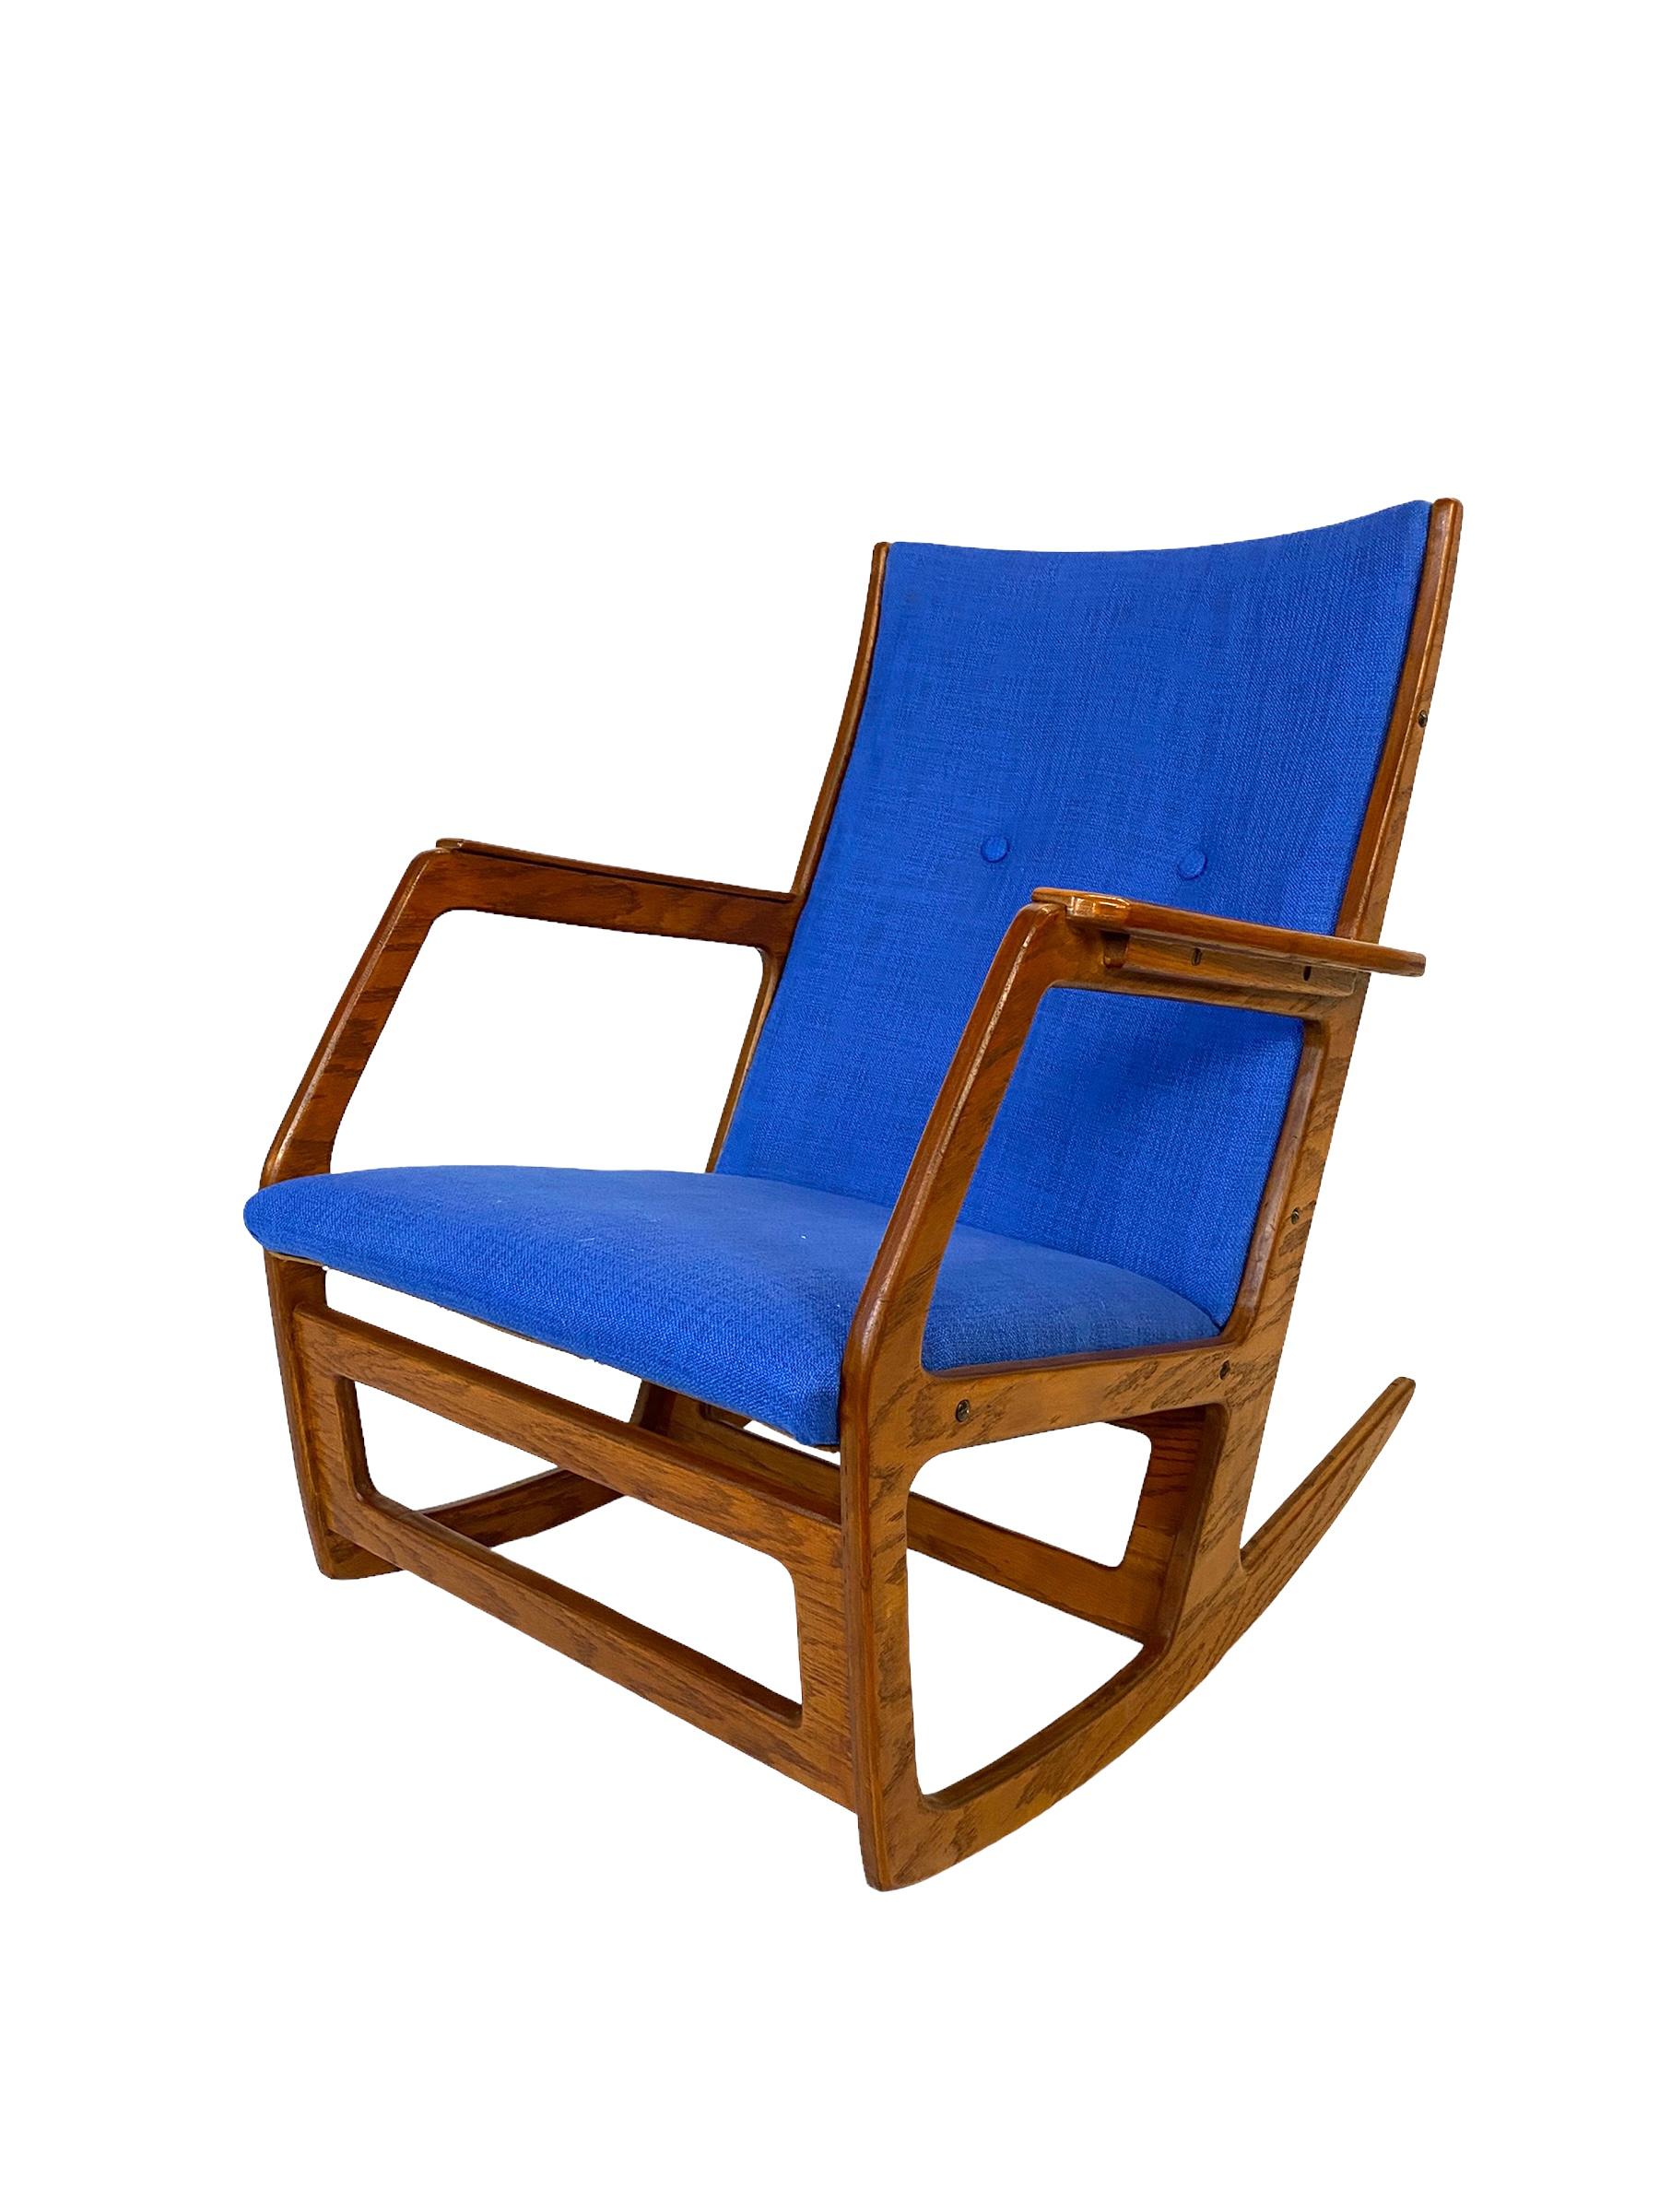 Danish Modern Rocking Chair Attributed to Georg Jensen For Sale 14